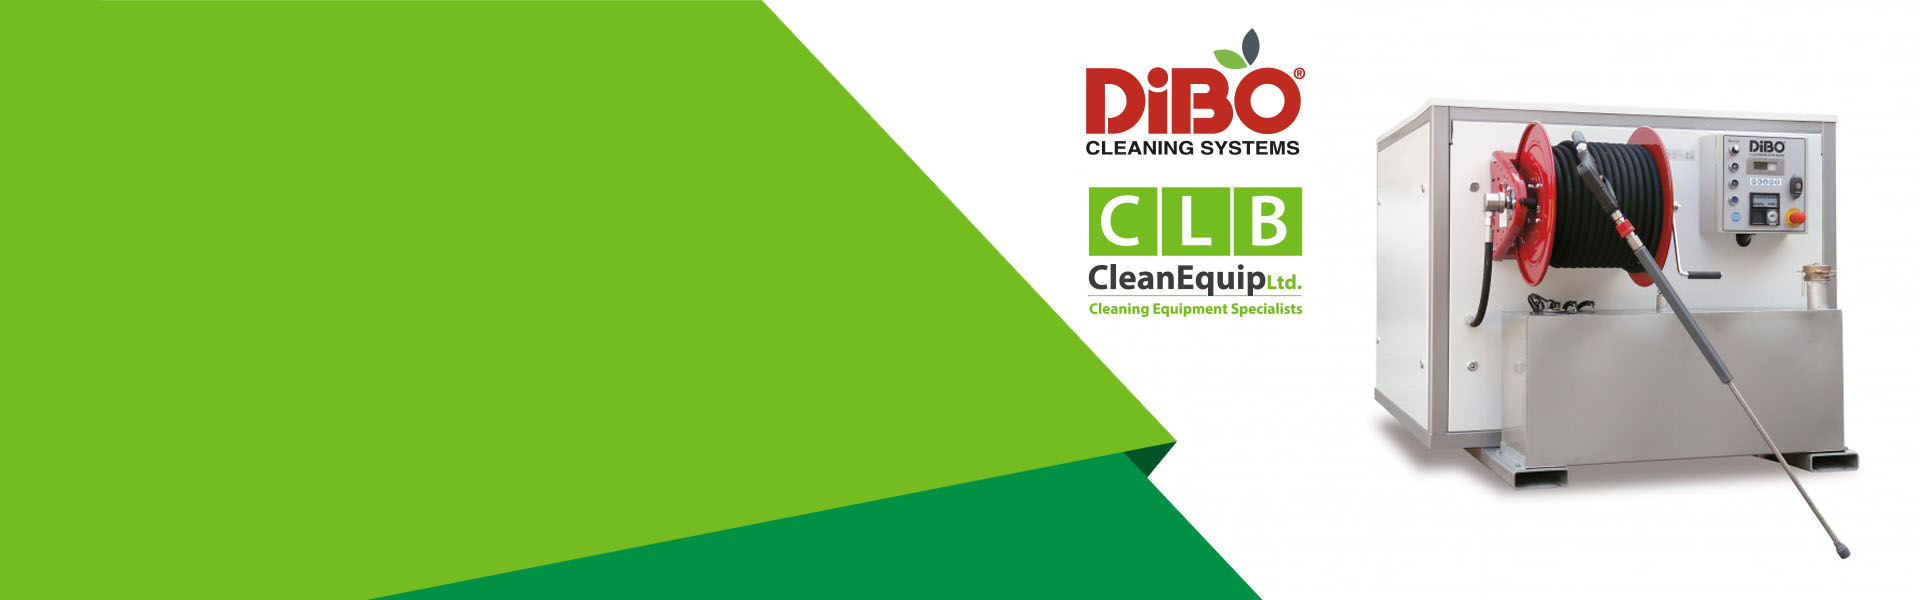 DiBO JMB-C+S Heavy Cleaning Hot Water Pressure Washer Trailer